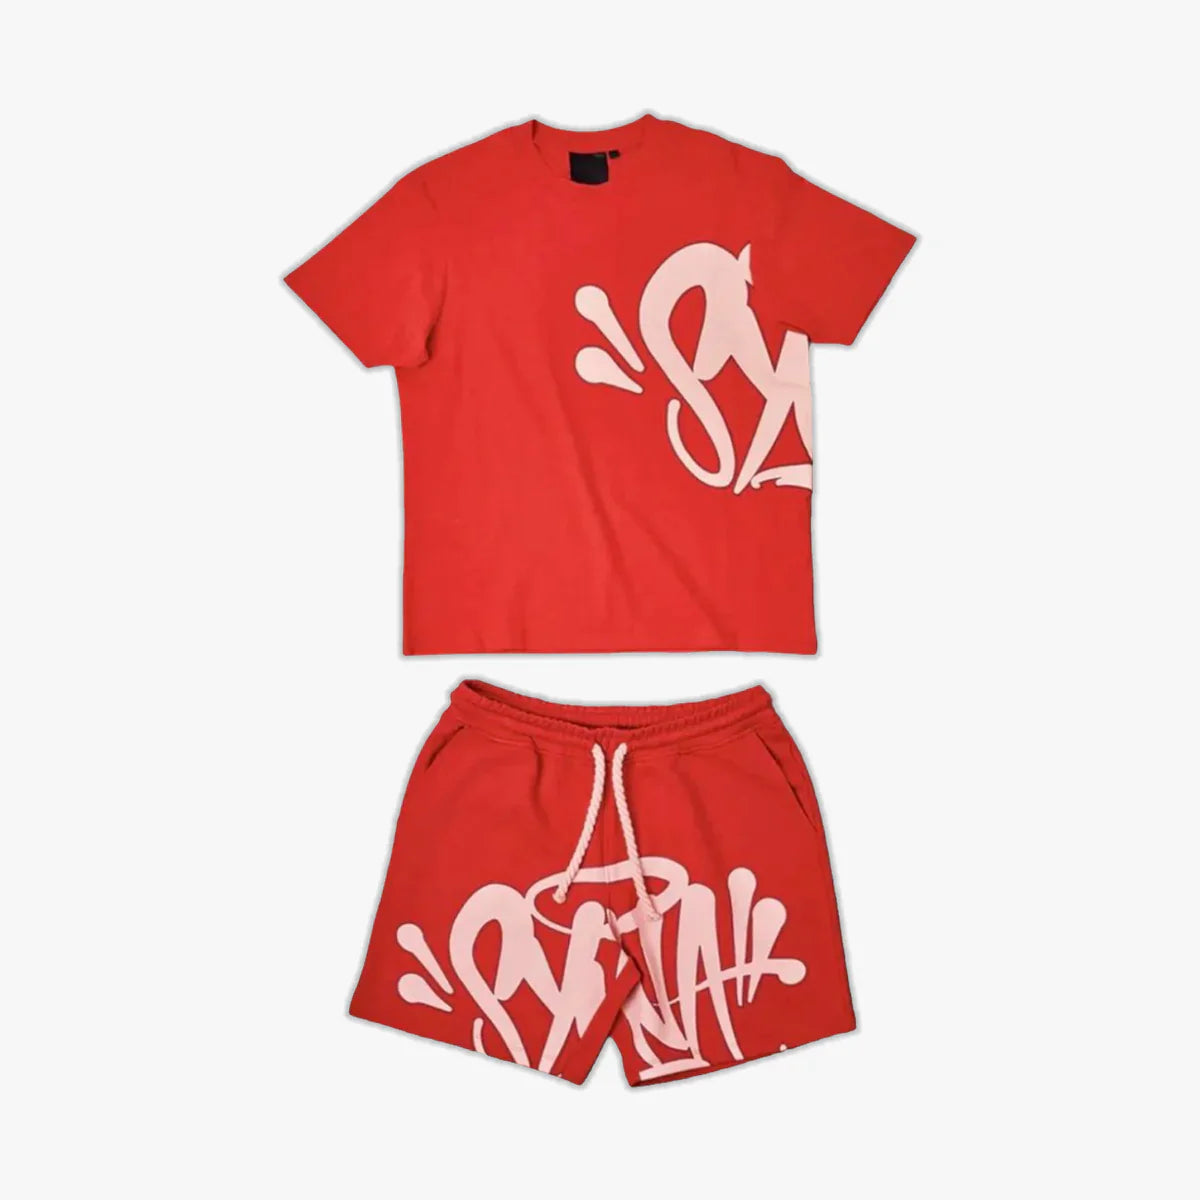 Synaworld T-shirt & Short Set - Pink/Red